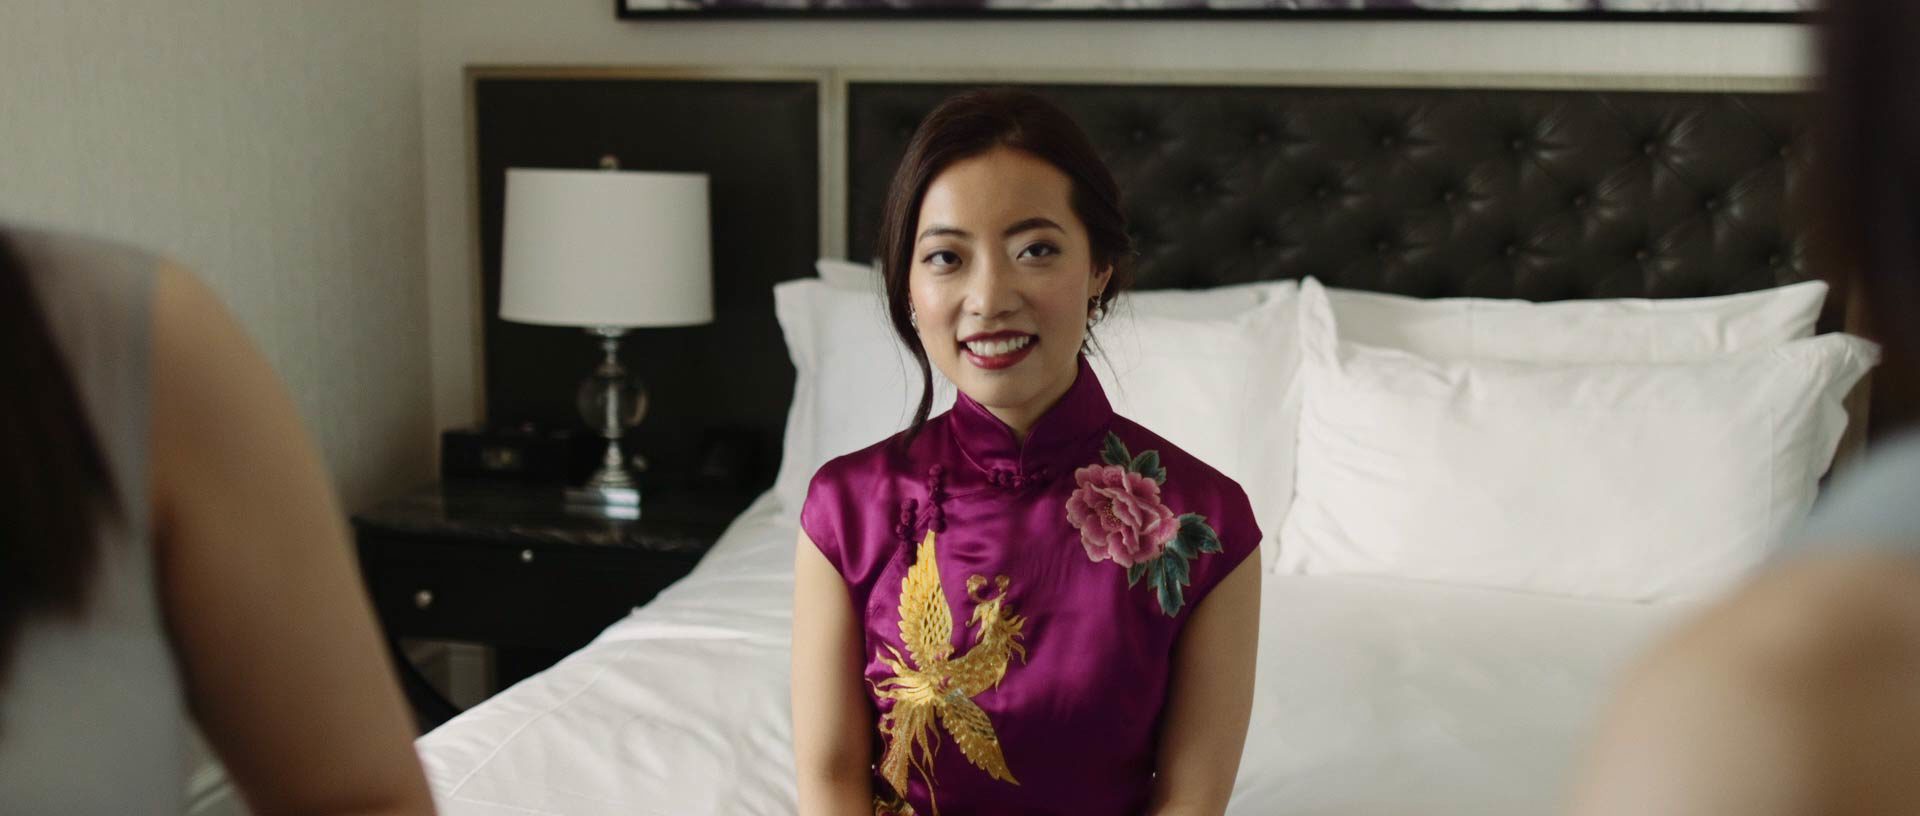 Traditional Chinese Door Crashing Games - Toronto Wedding Videographer